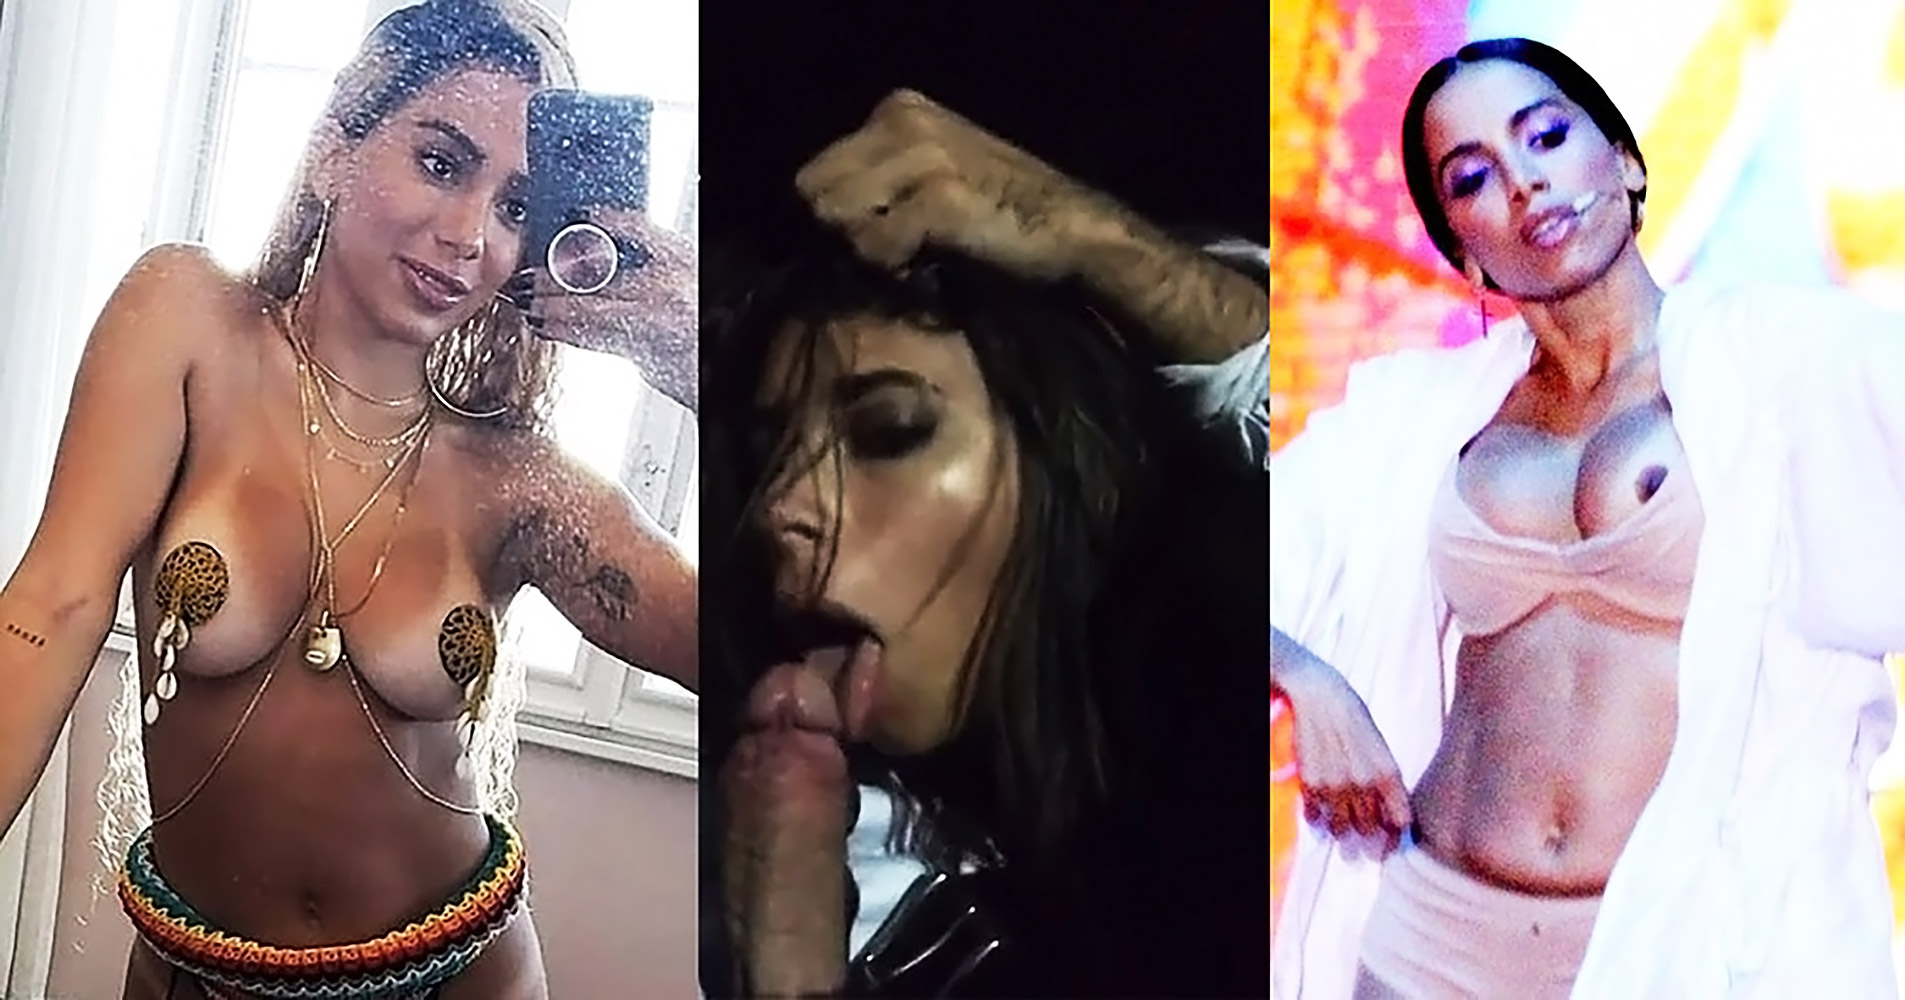 Anitta Nudes Vids Brazilian Singer